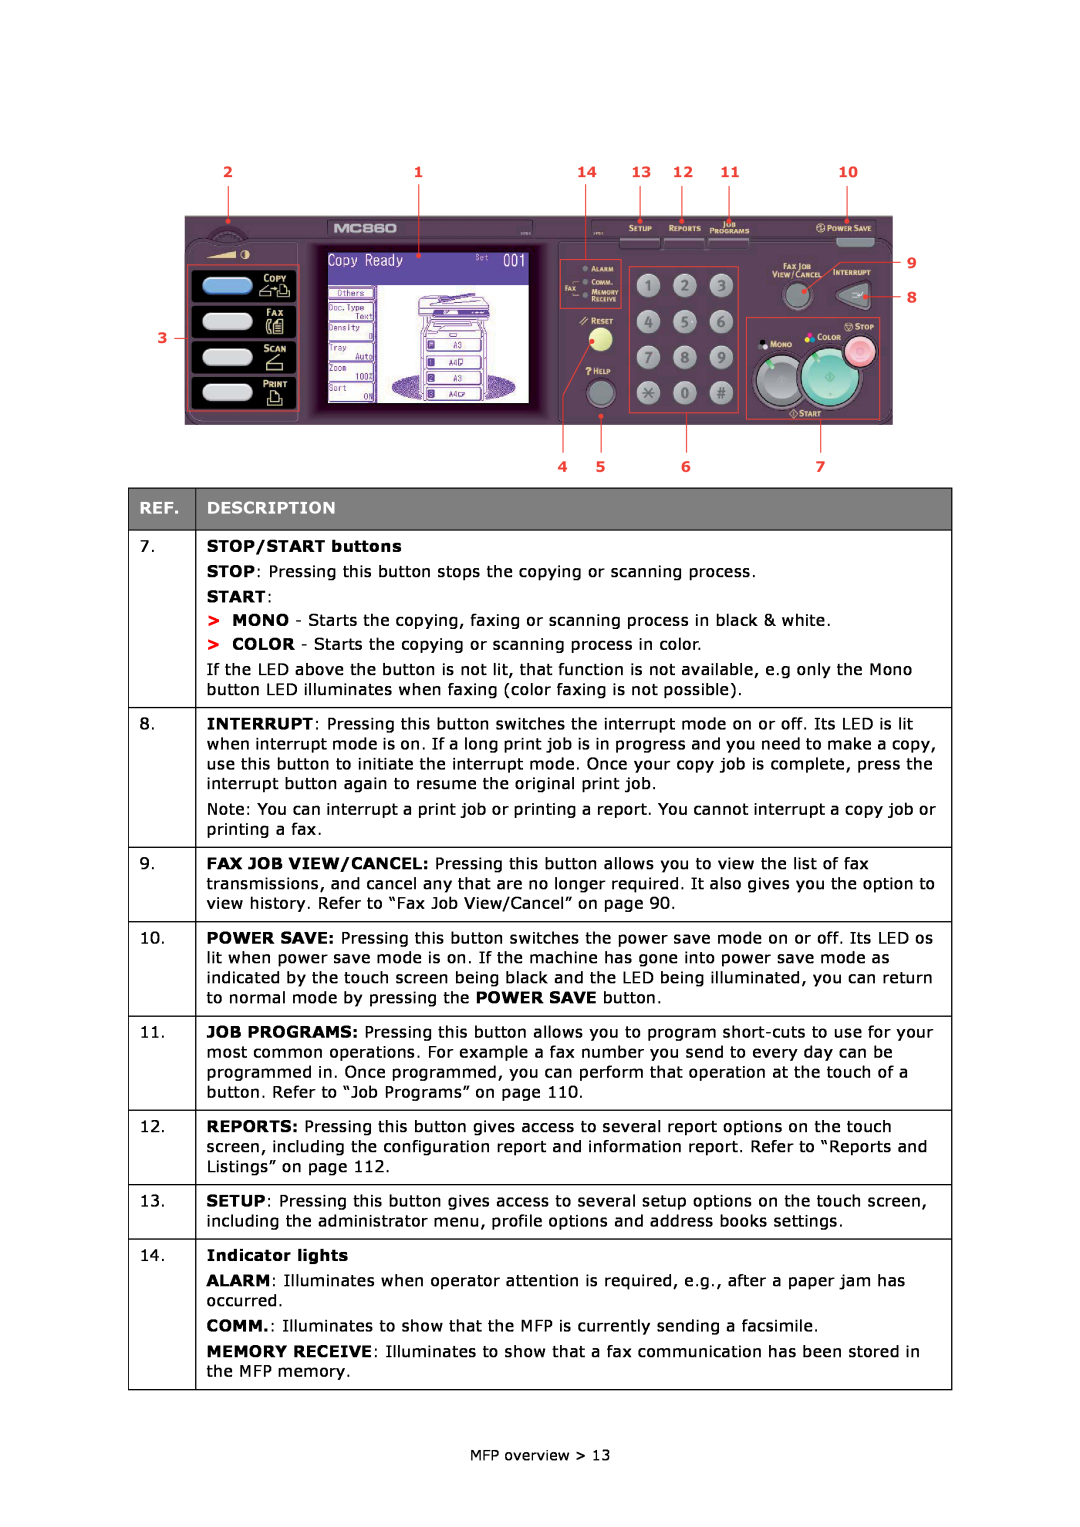 Oki MC860n MFP manual Ref. Description, STOP/START buttons, Start, Indicator lights 